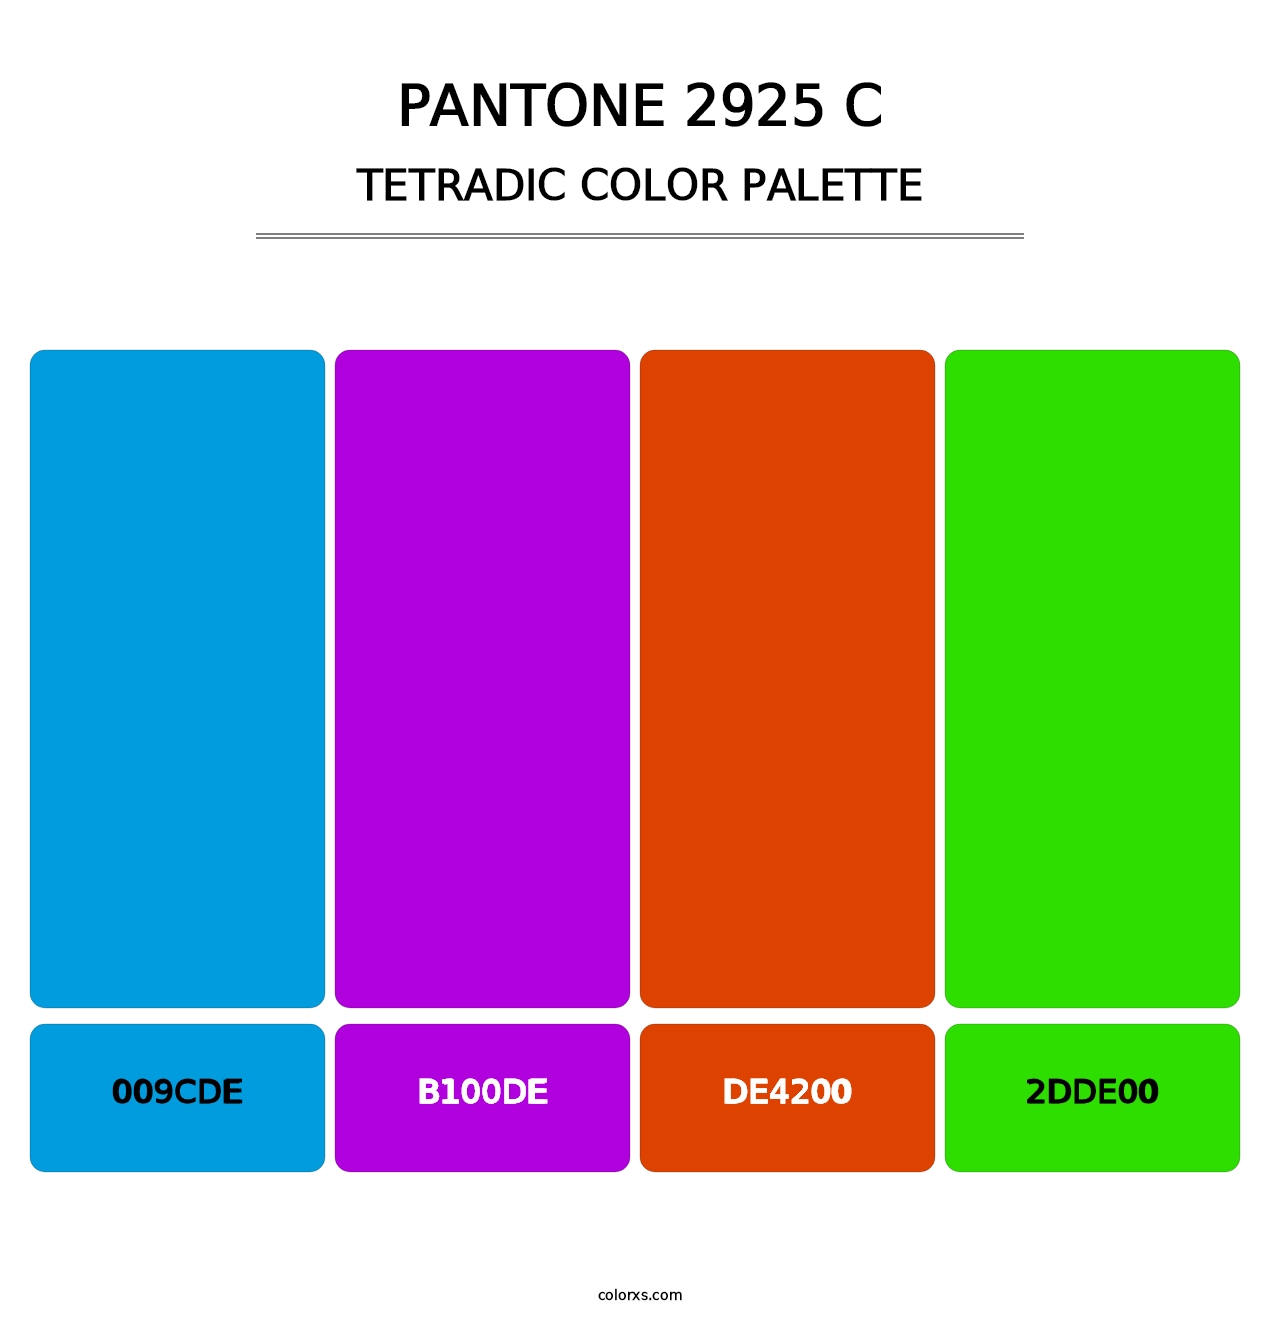 PANTONE 2925 C - Tetradic Color Palette